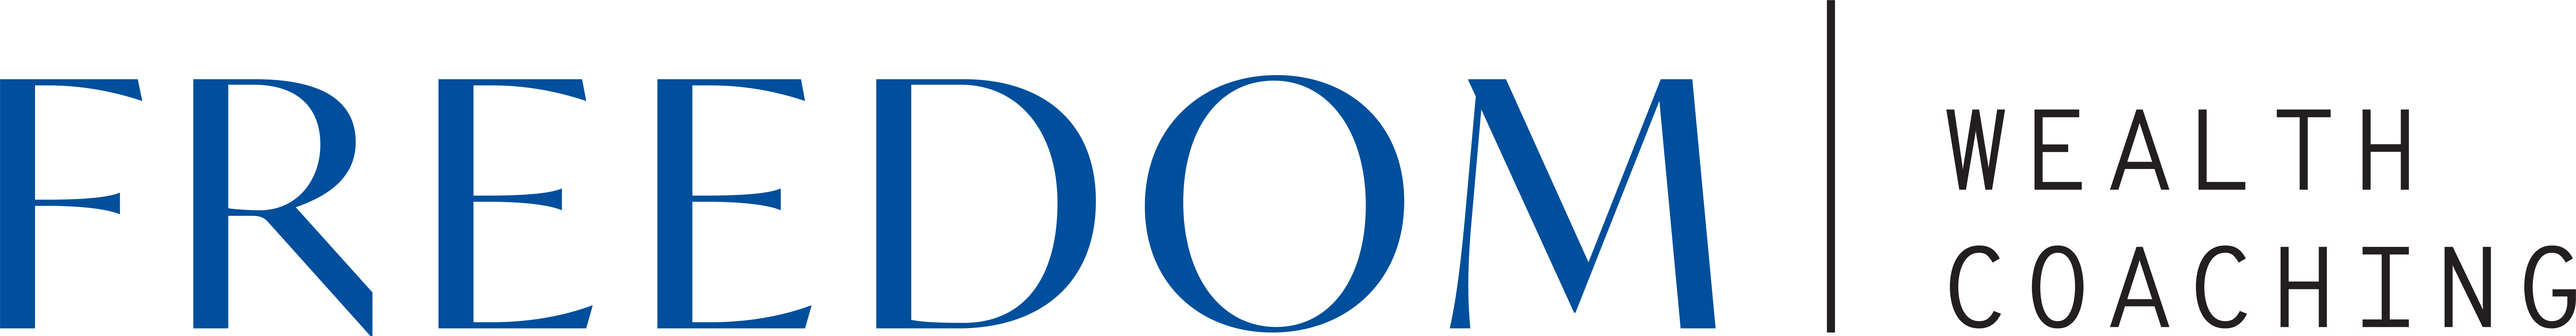 Brand Ambassador logo